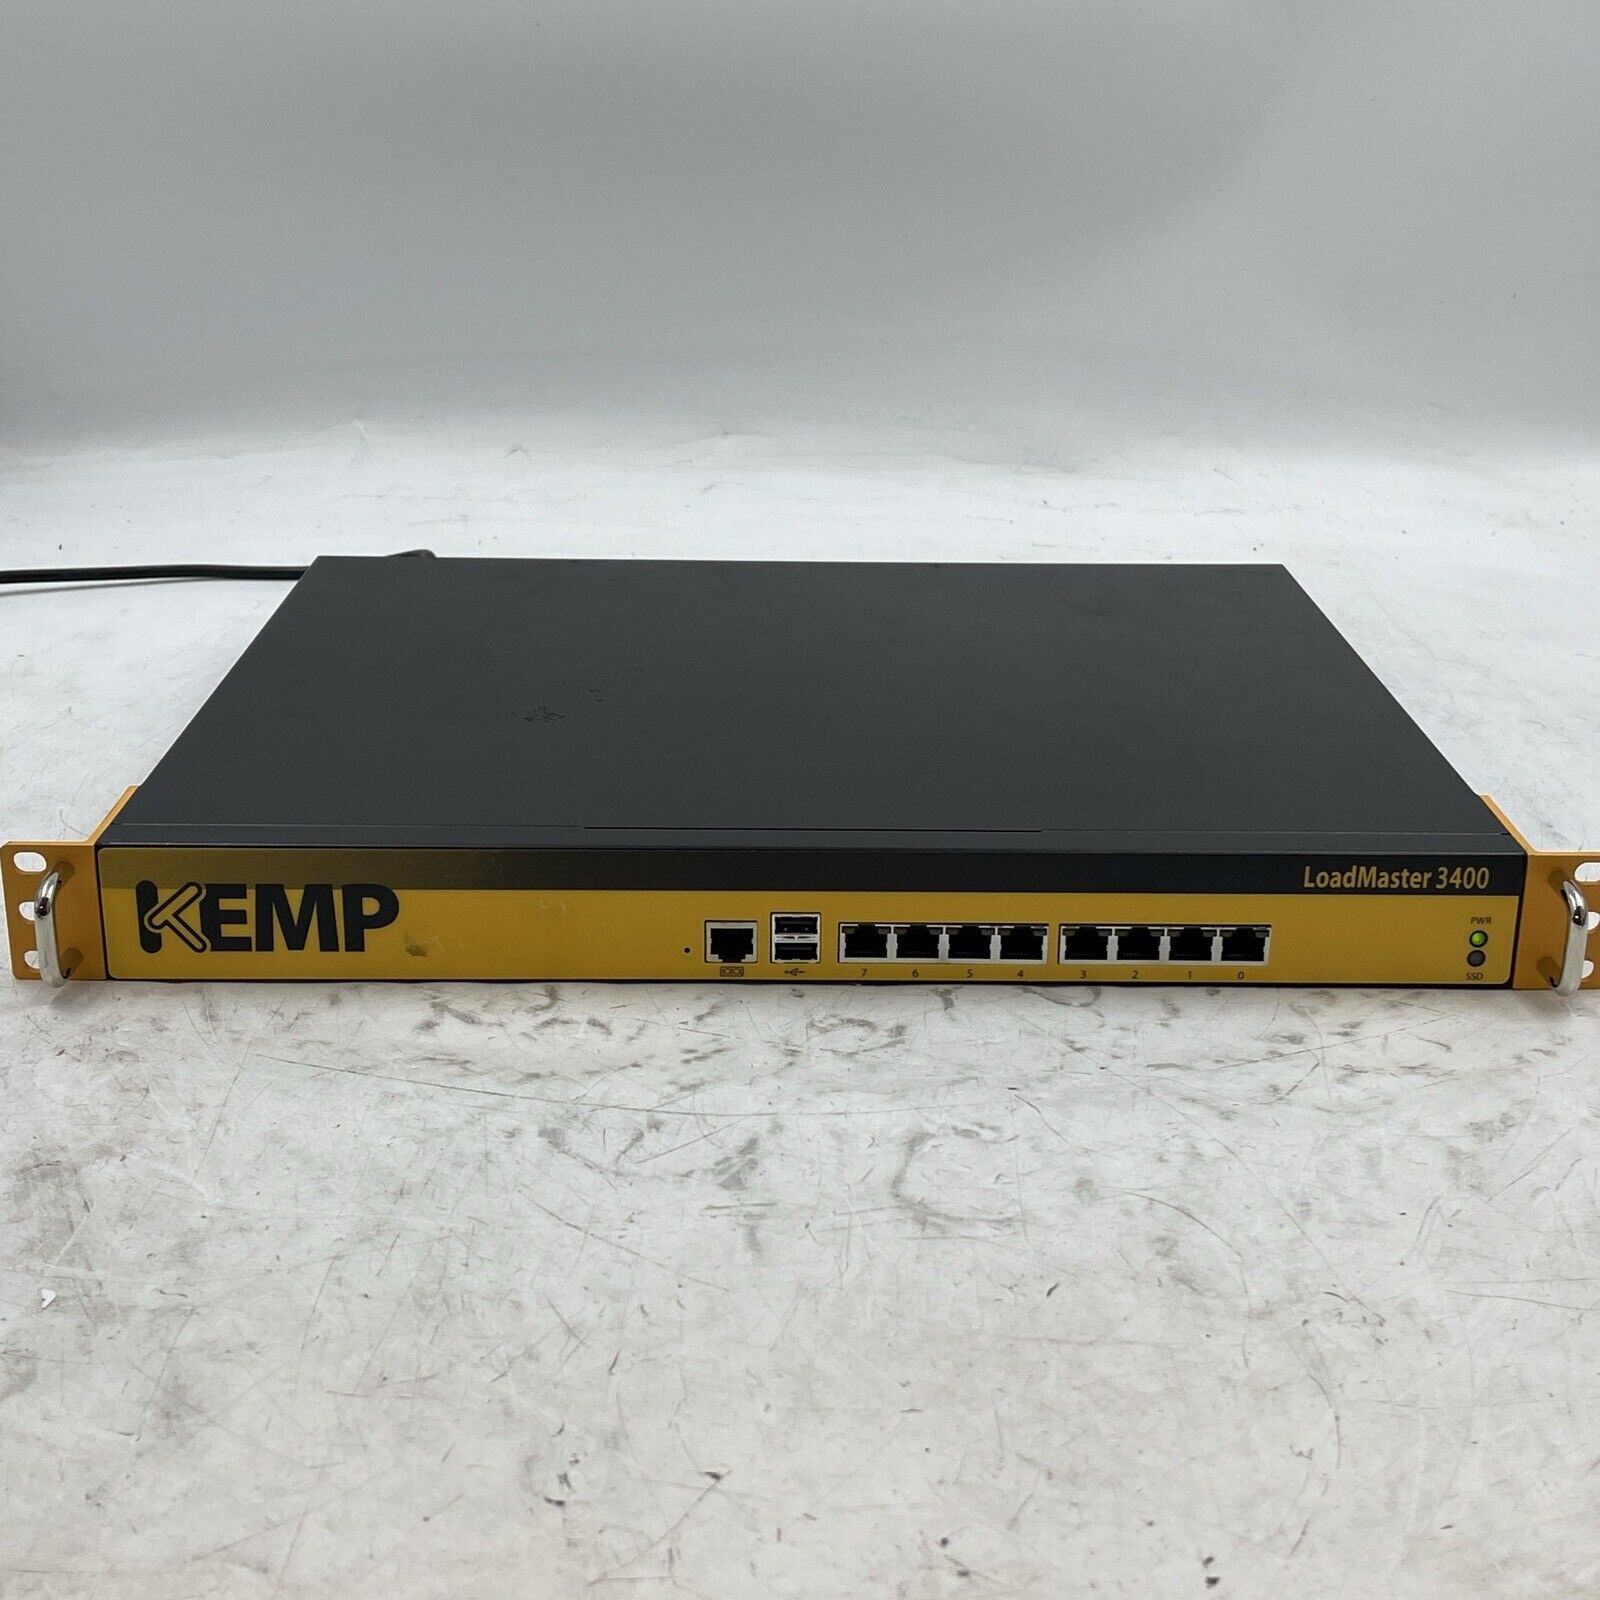 KEMP LoadMaster 3400 Server Load Balancer VPN Firewall